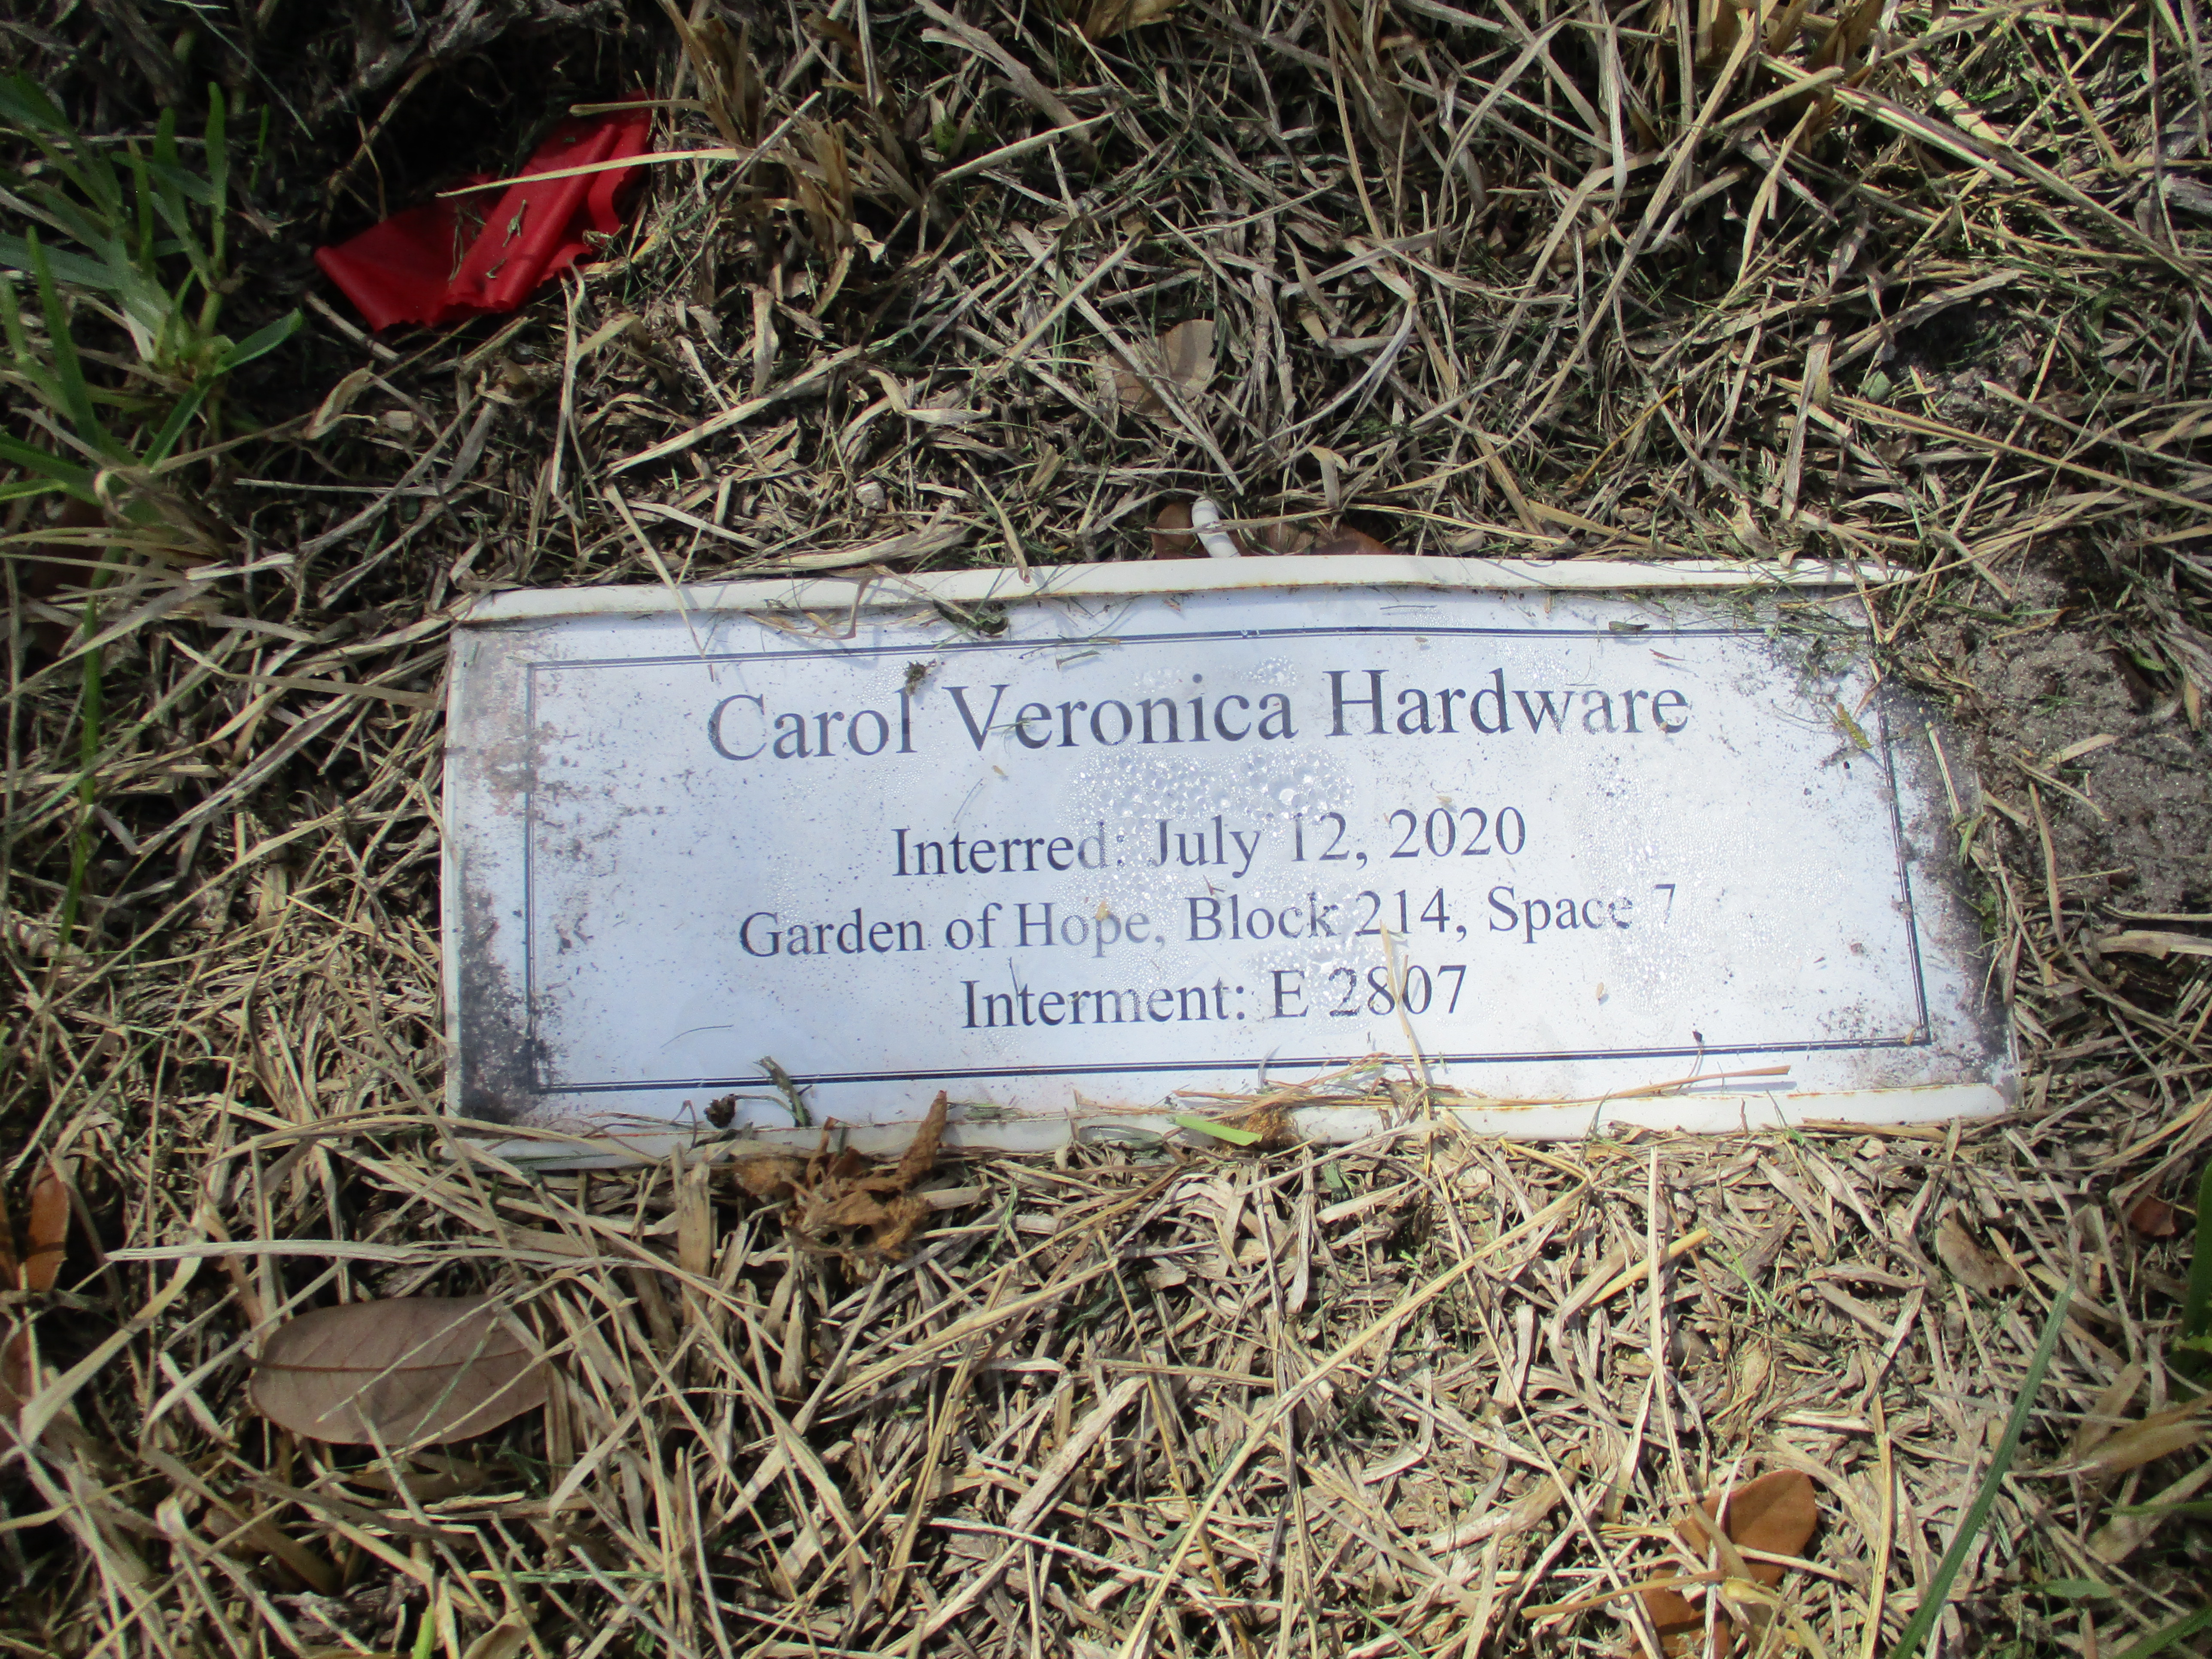 Carol Veronica Hardware